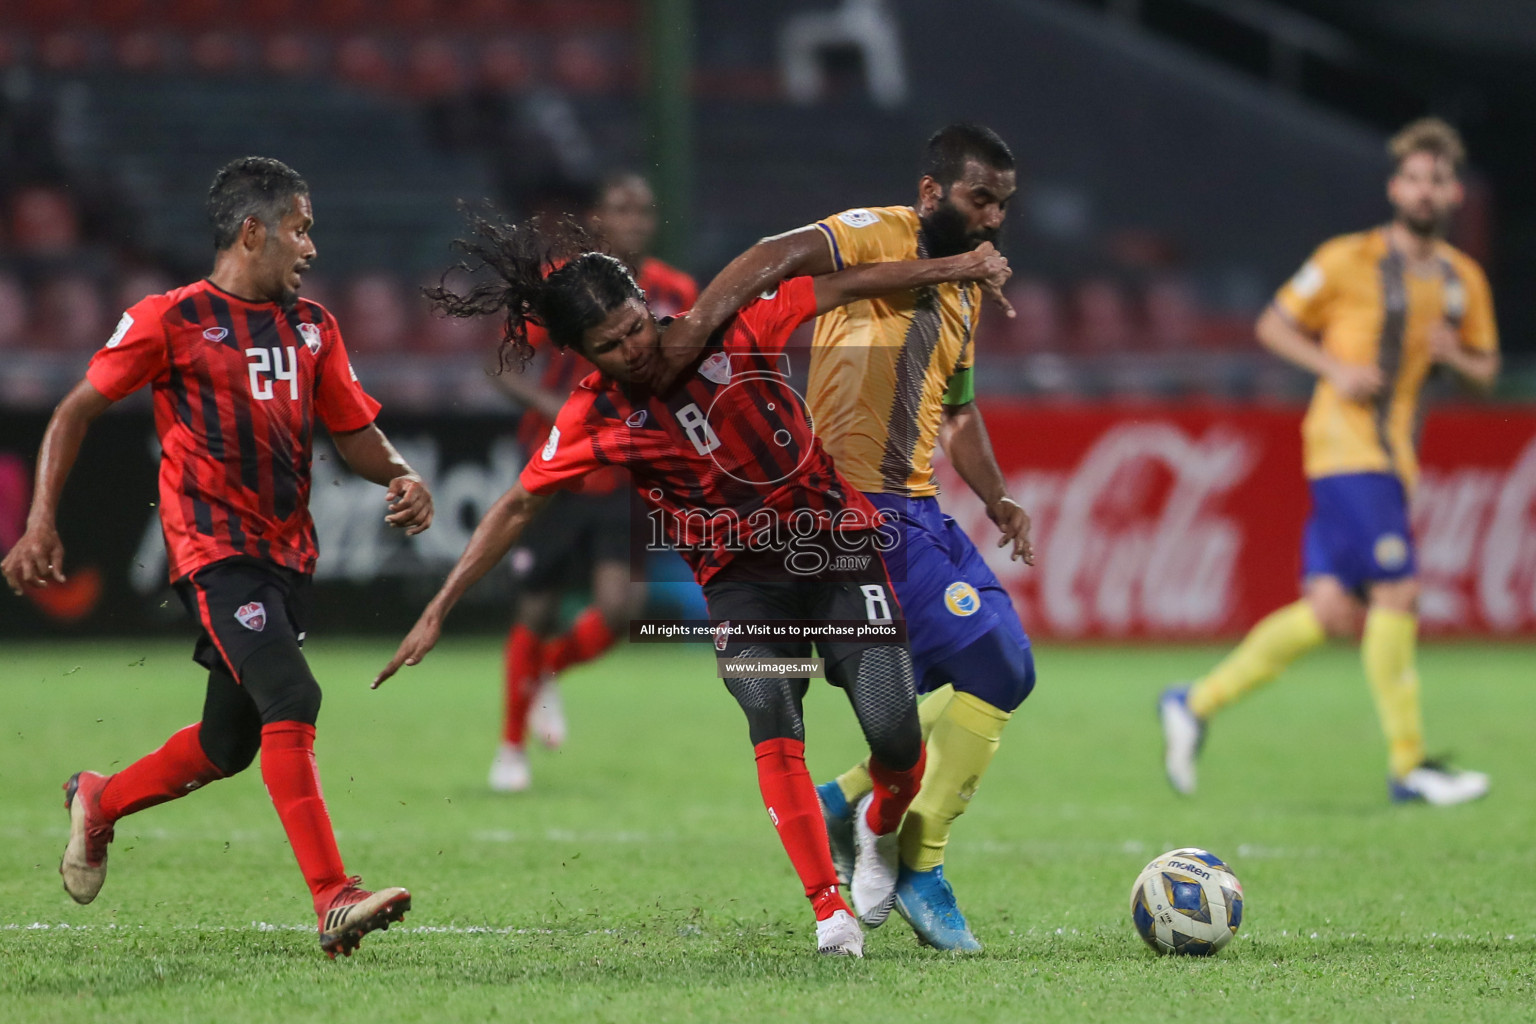 Club Valencia vs TC Sports Club in Dhiraagu Dhivehi Premier League 2020-21 on 09 January 2021 held in Male', Maldives